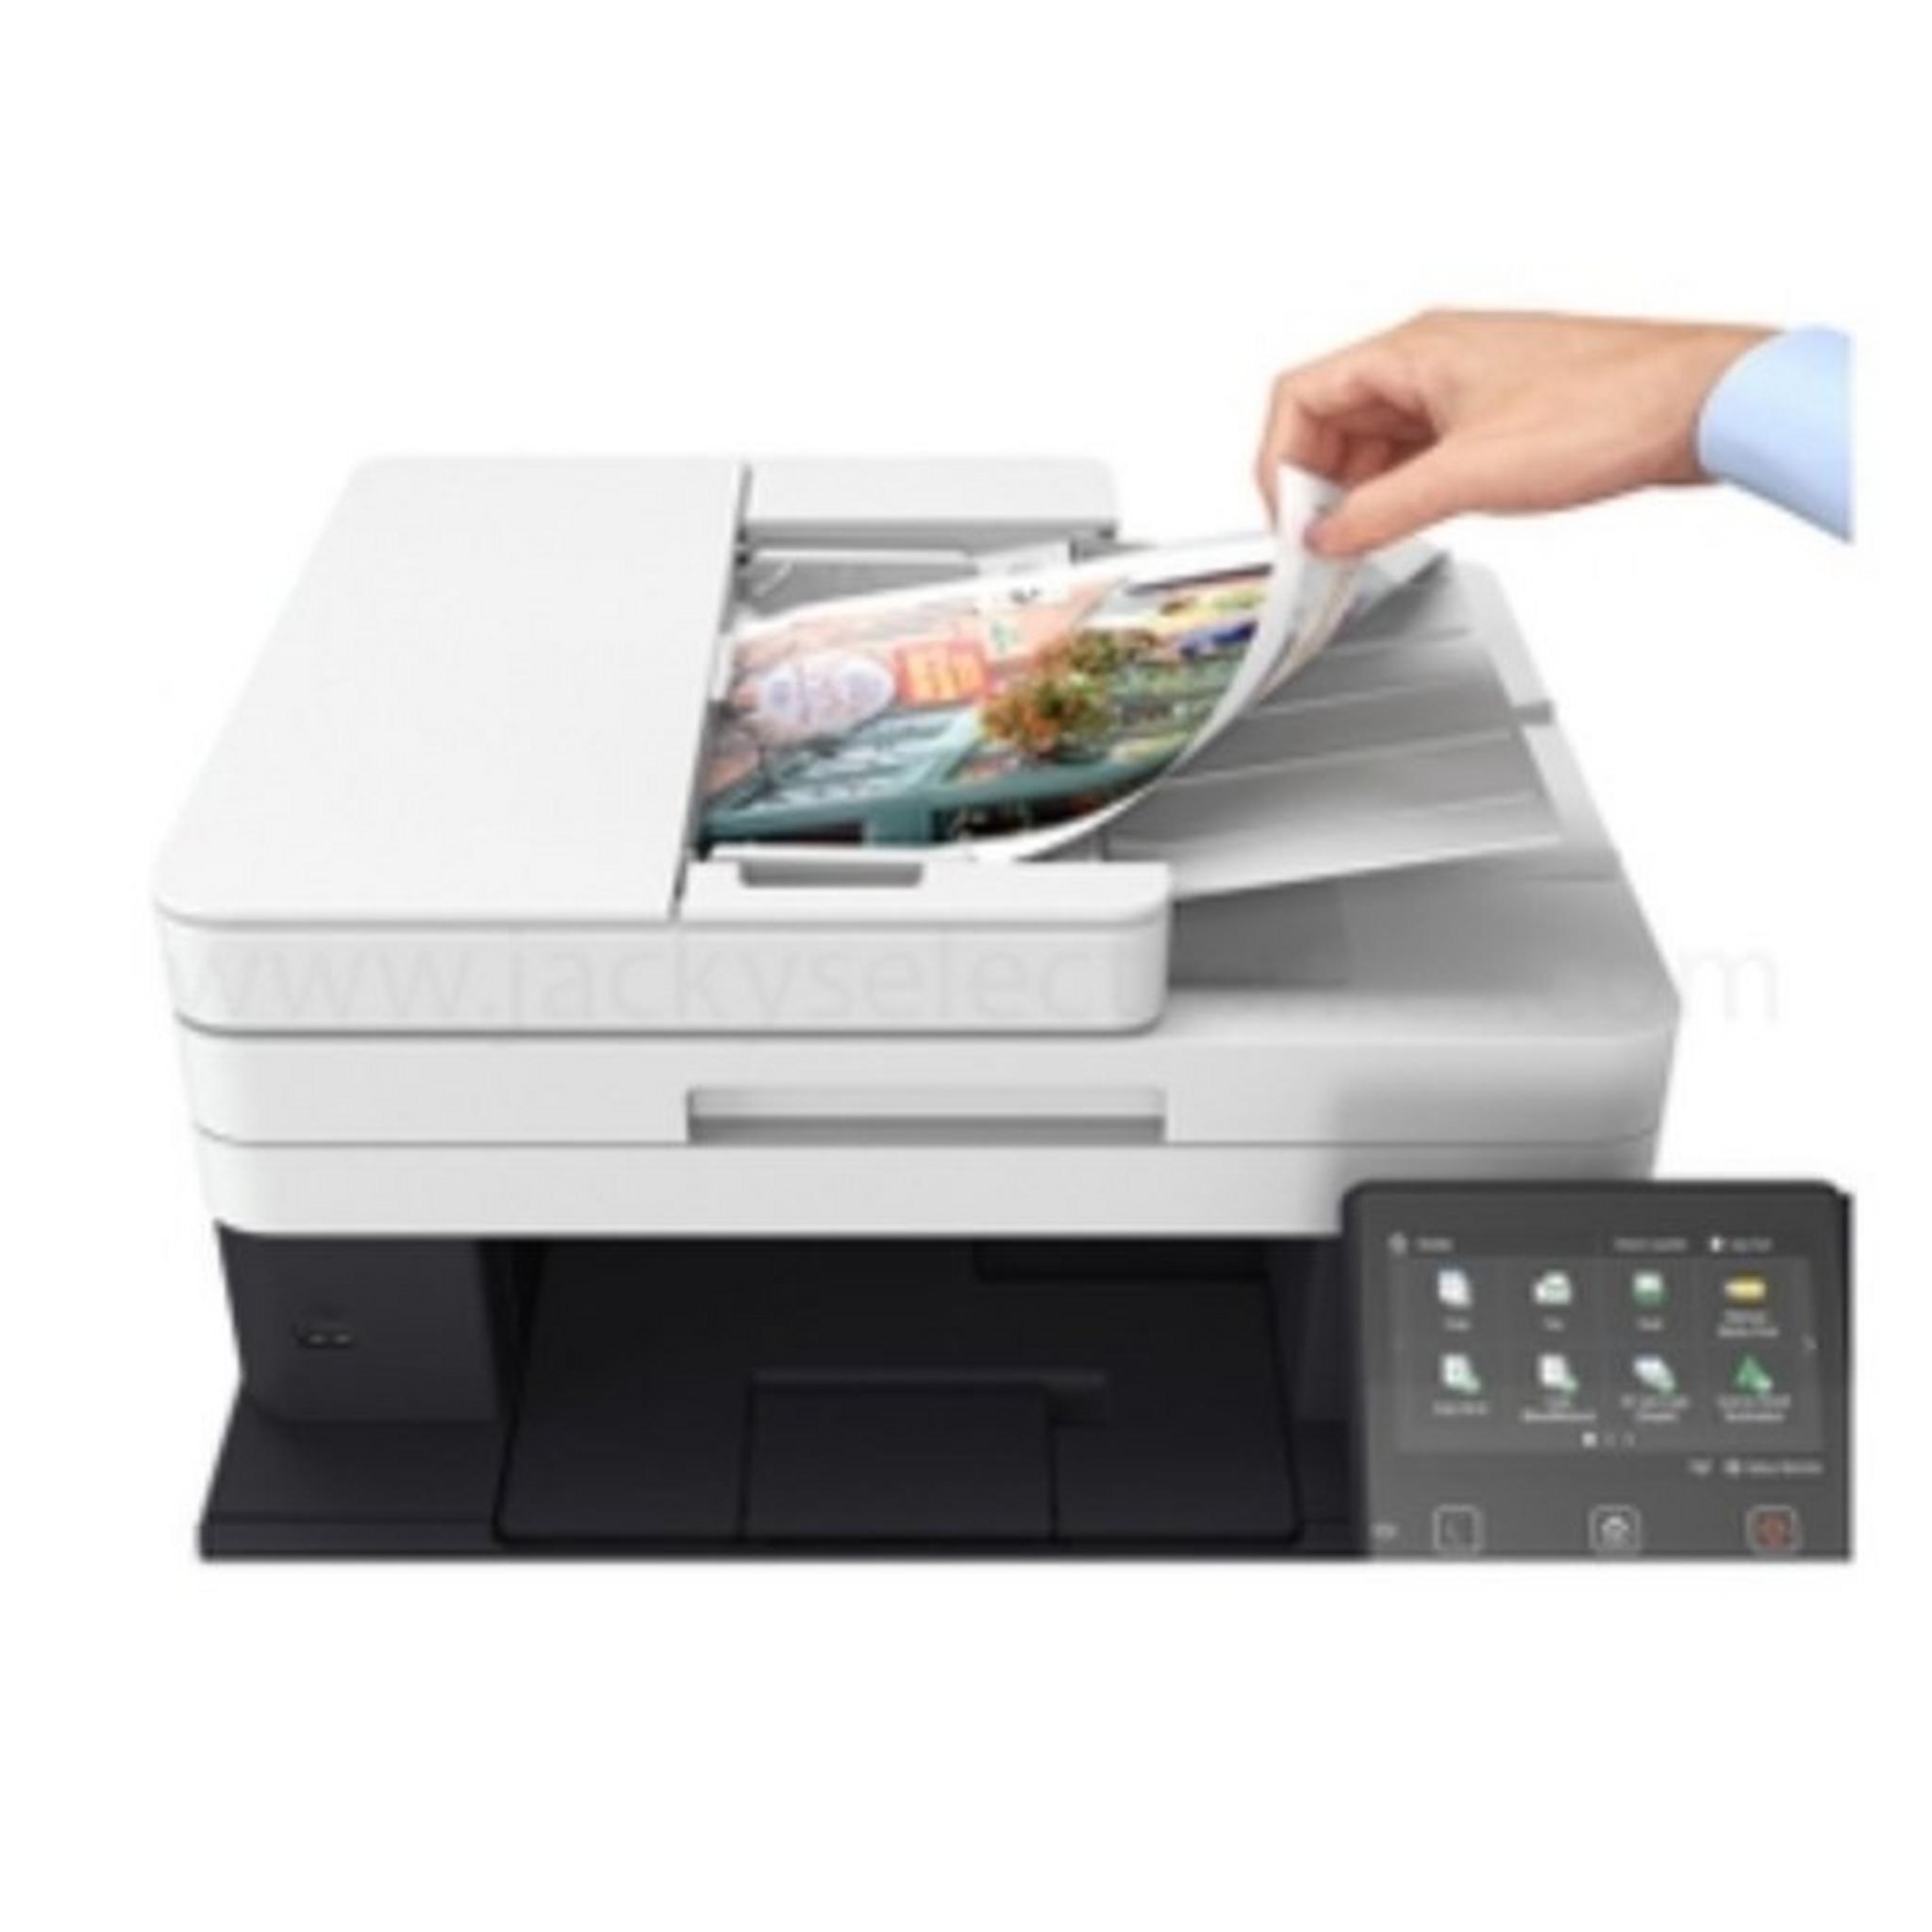 Canon i-Sensys A4 Color Multifunction Laser Printer – White (MF643Cdw)